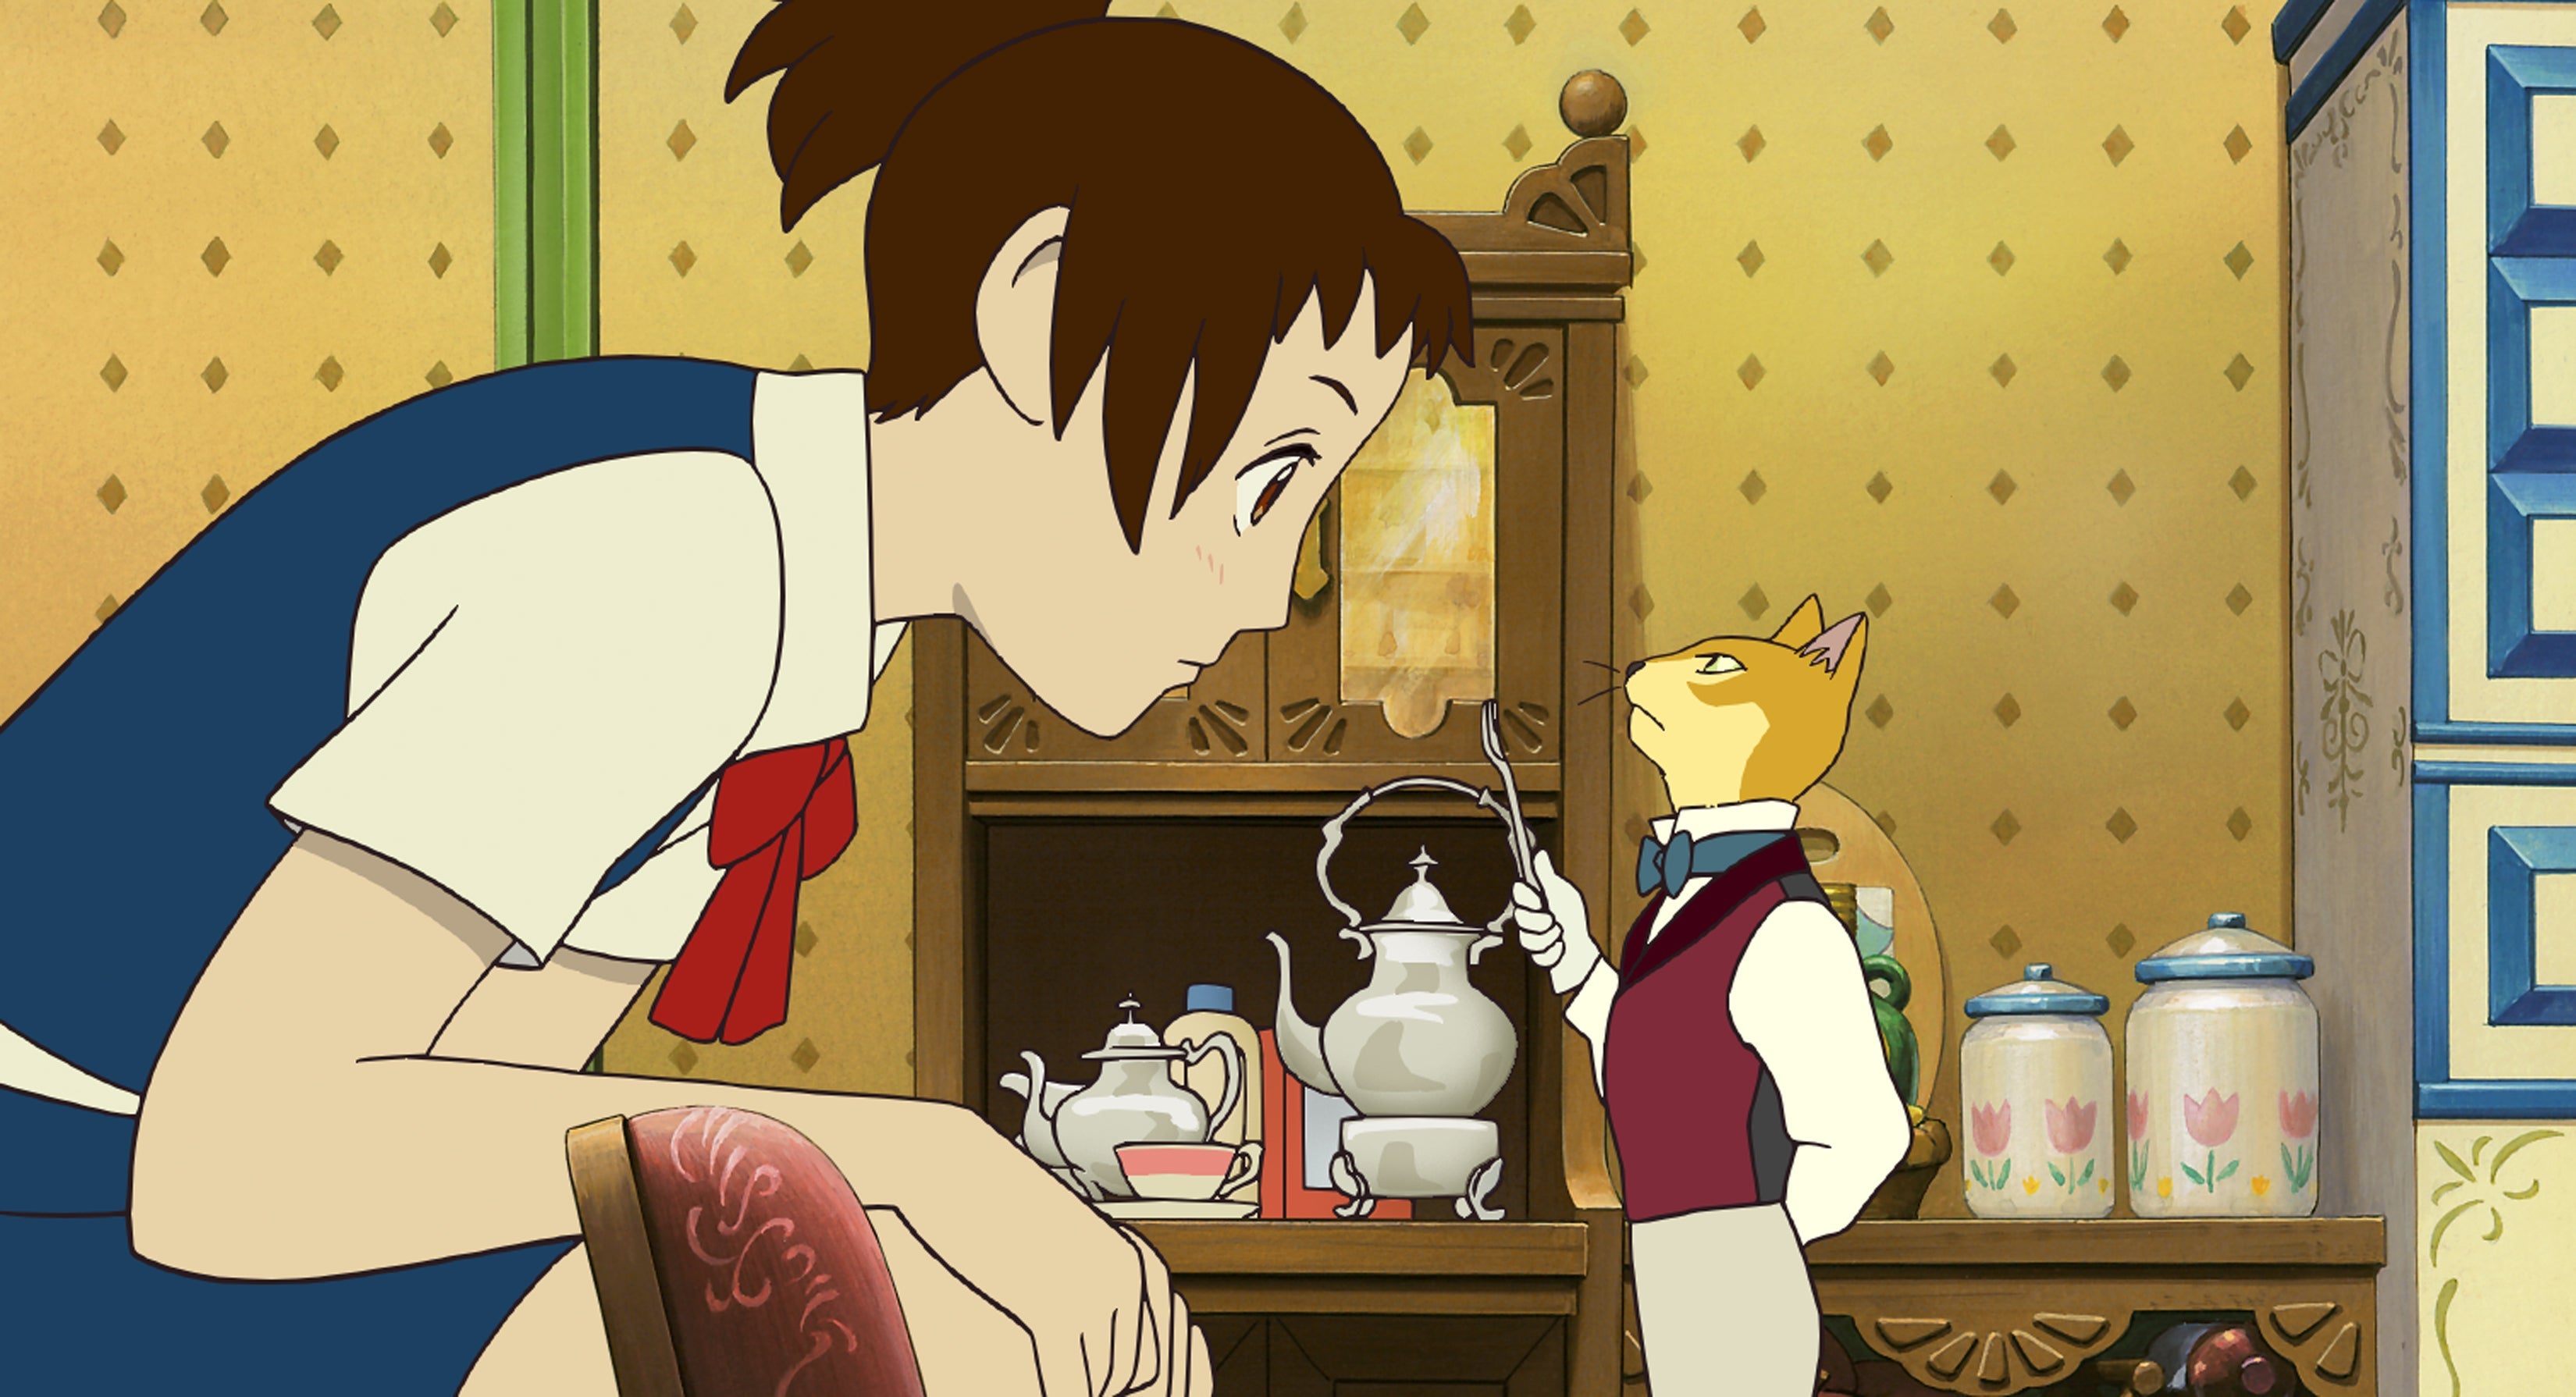 Studio Ghibli's 'The Cat Returns' Merchandise at Donguri Sora